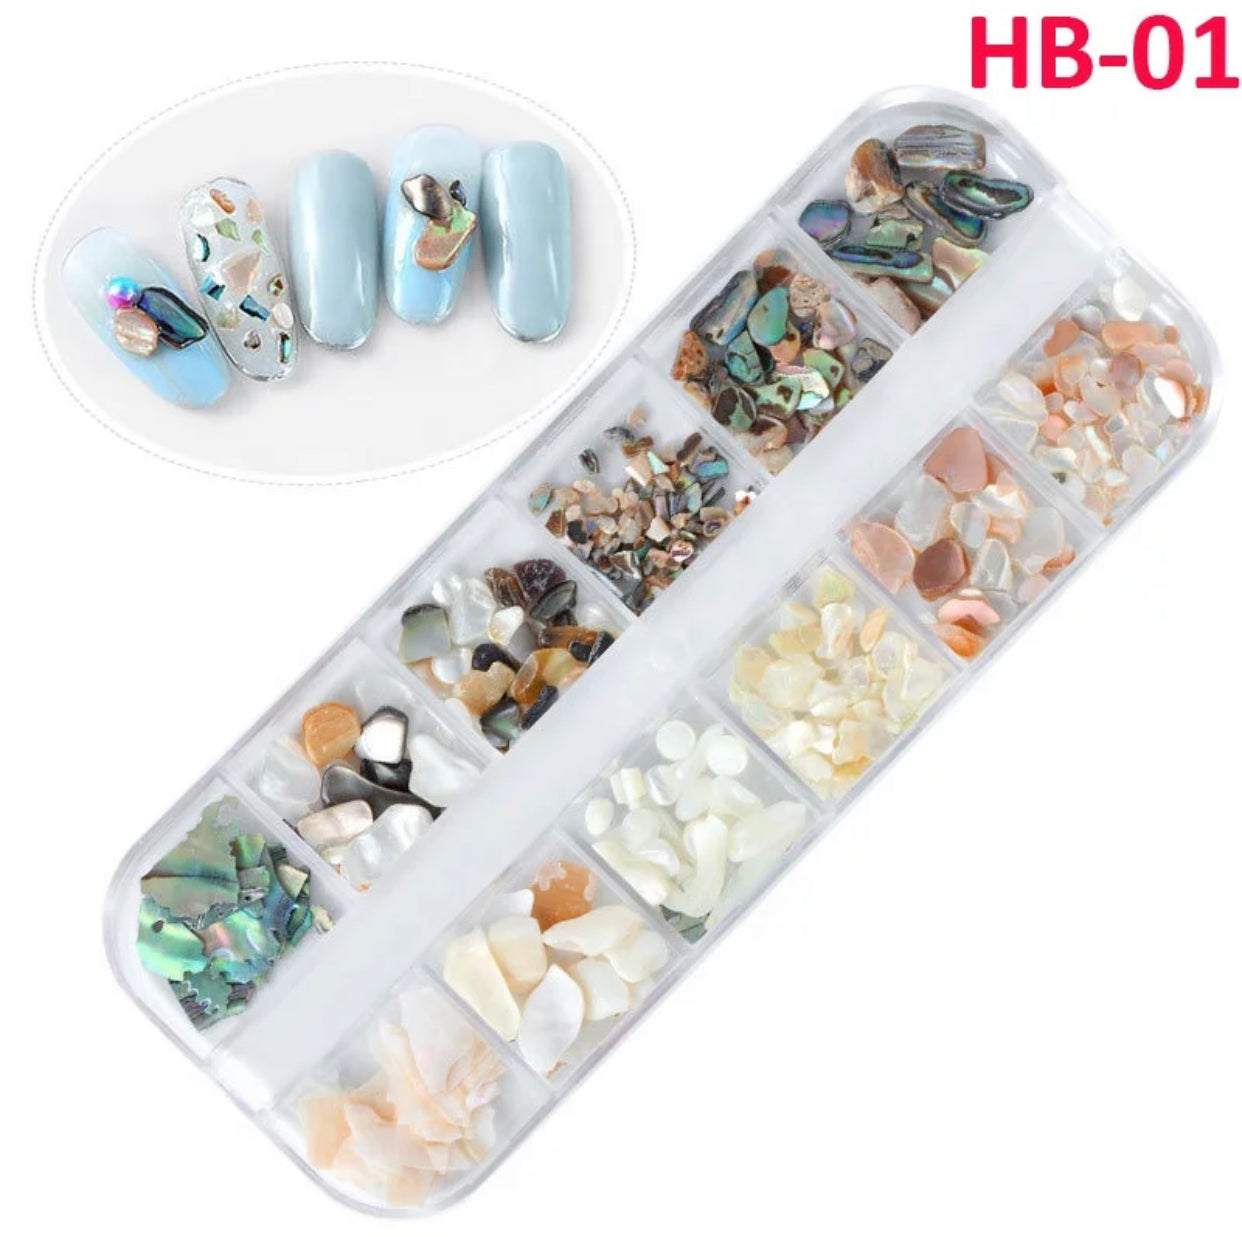 Fashion Seashells Jewelry 3D Charms Nail Art Design HB - Premier Nail Supply 